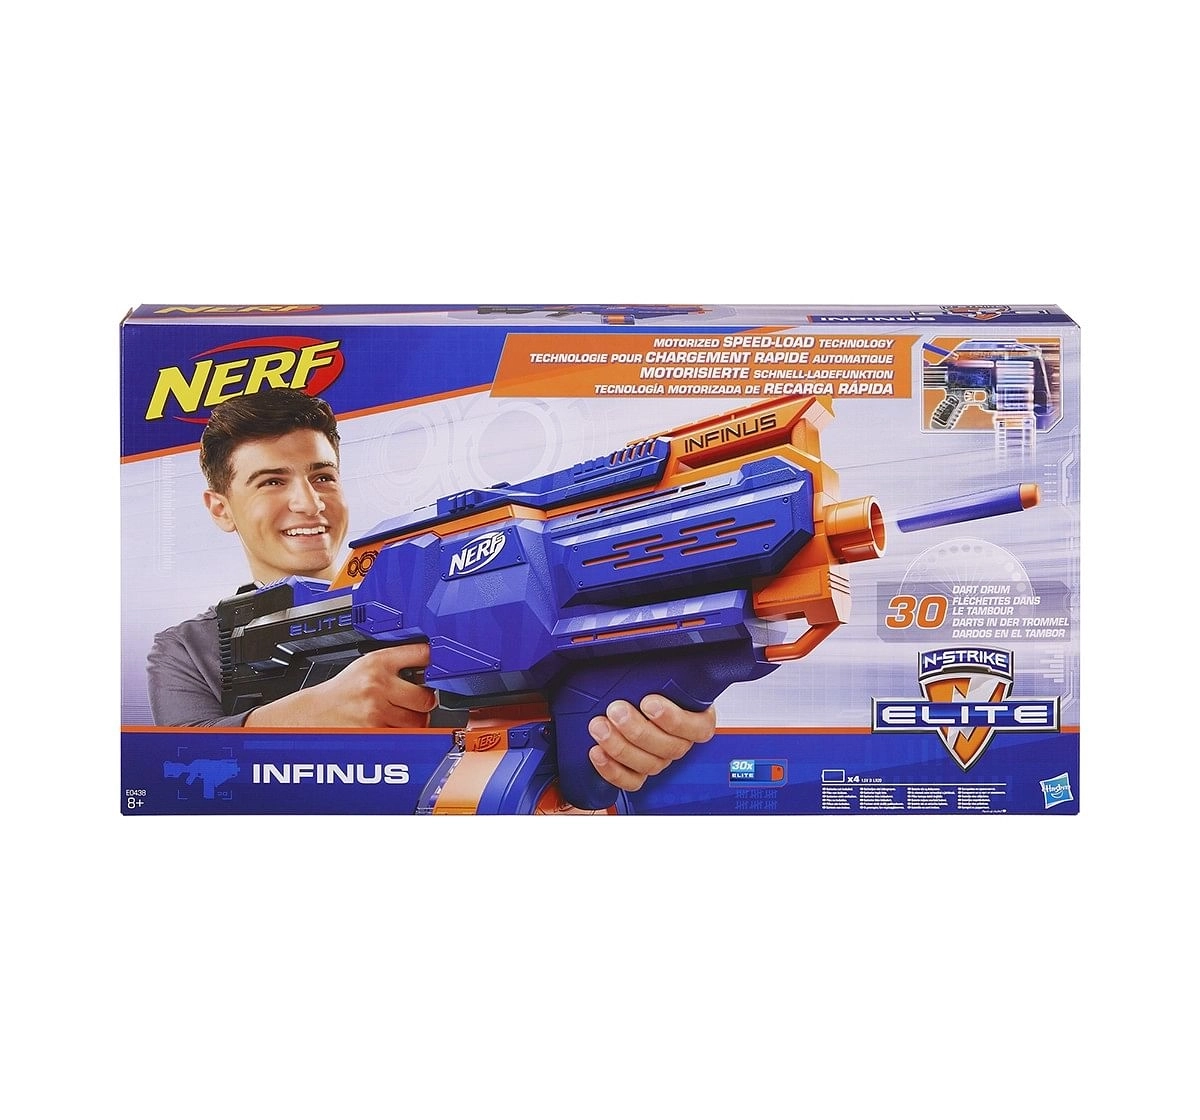 Nerf Infinus Blasters for age 8Y+ 